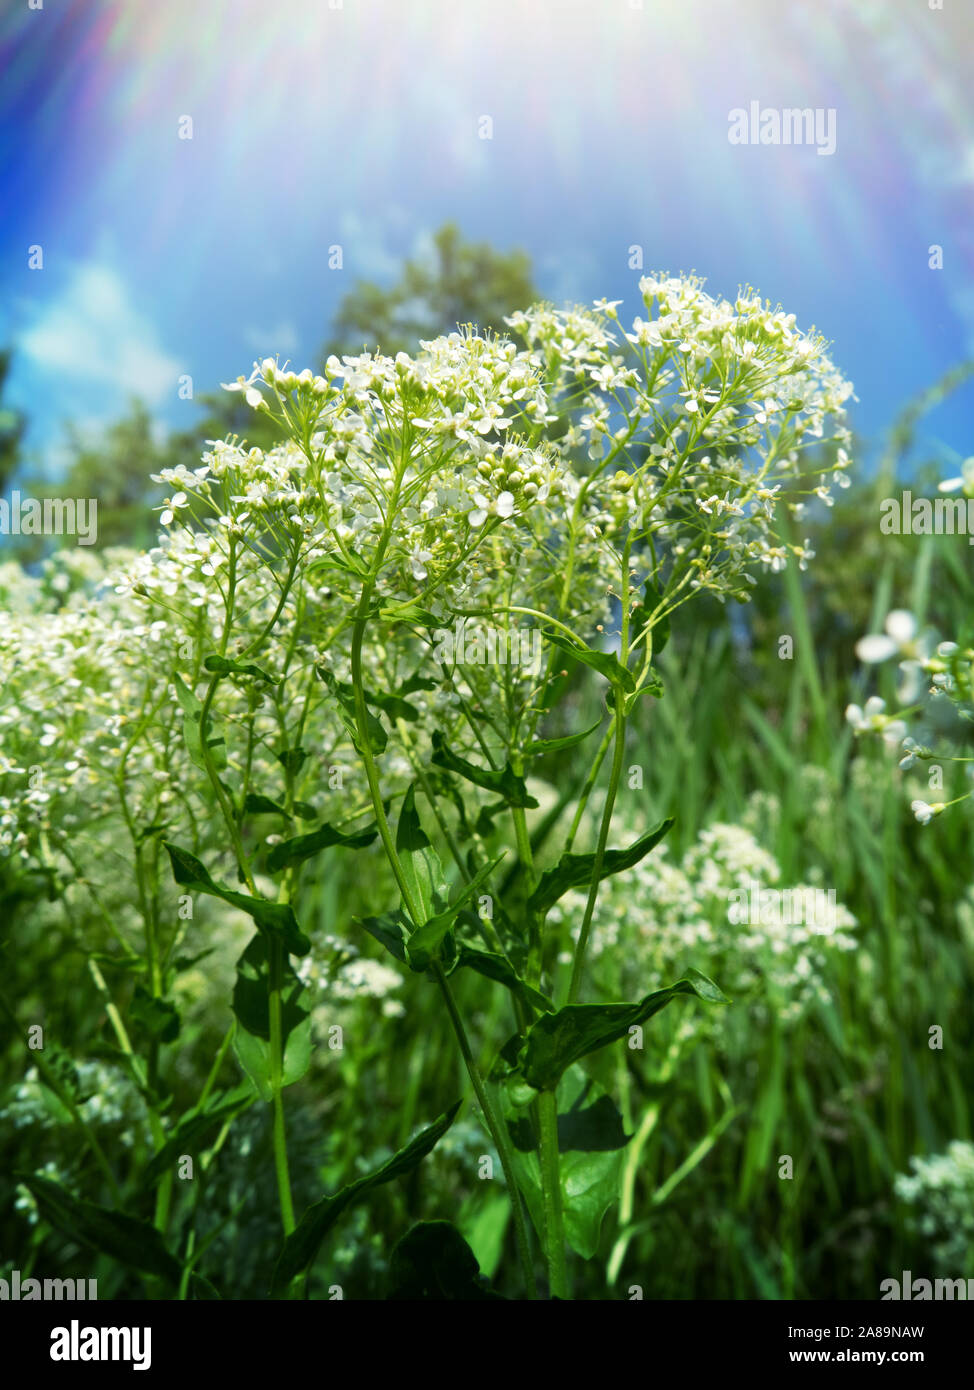 Hoary pepperwort (Cardaria draba) is Medicinal herbs as antiscorbutic remedies, average flow of the Volga river Stock Photo